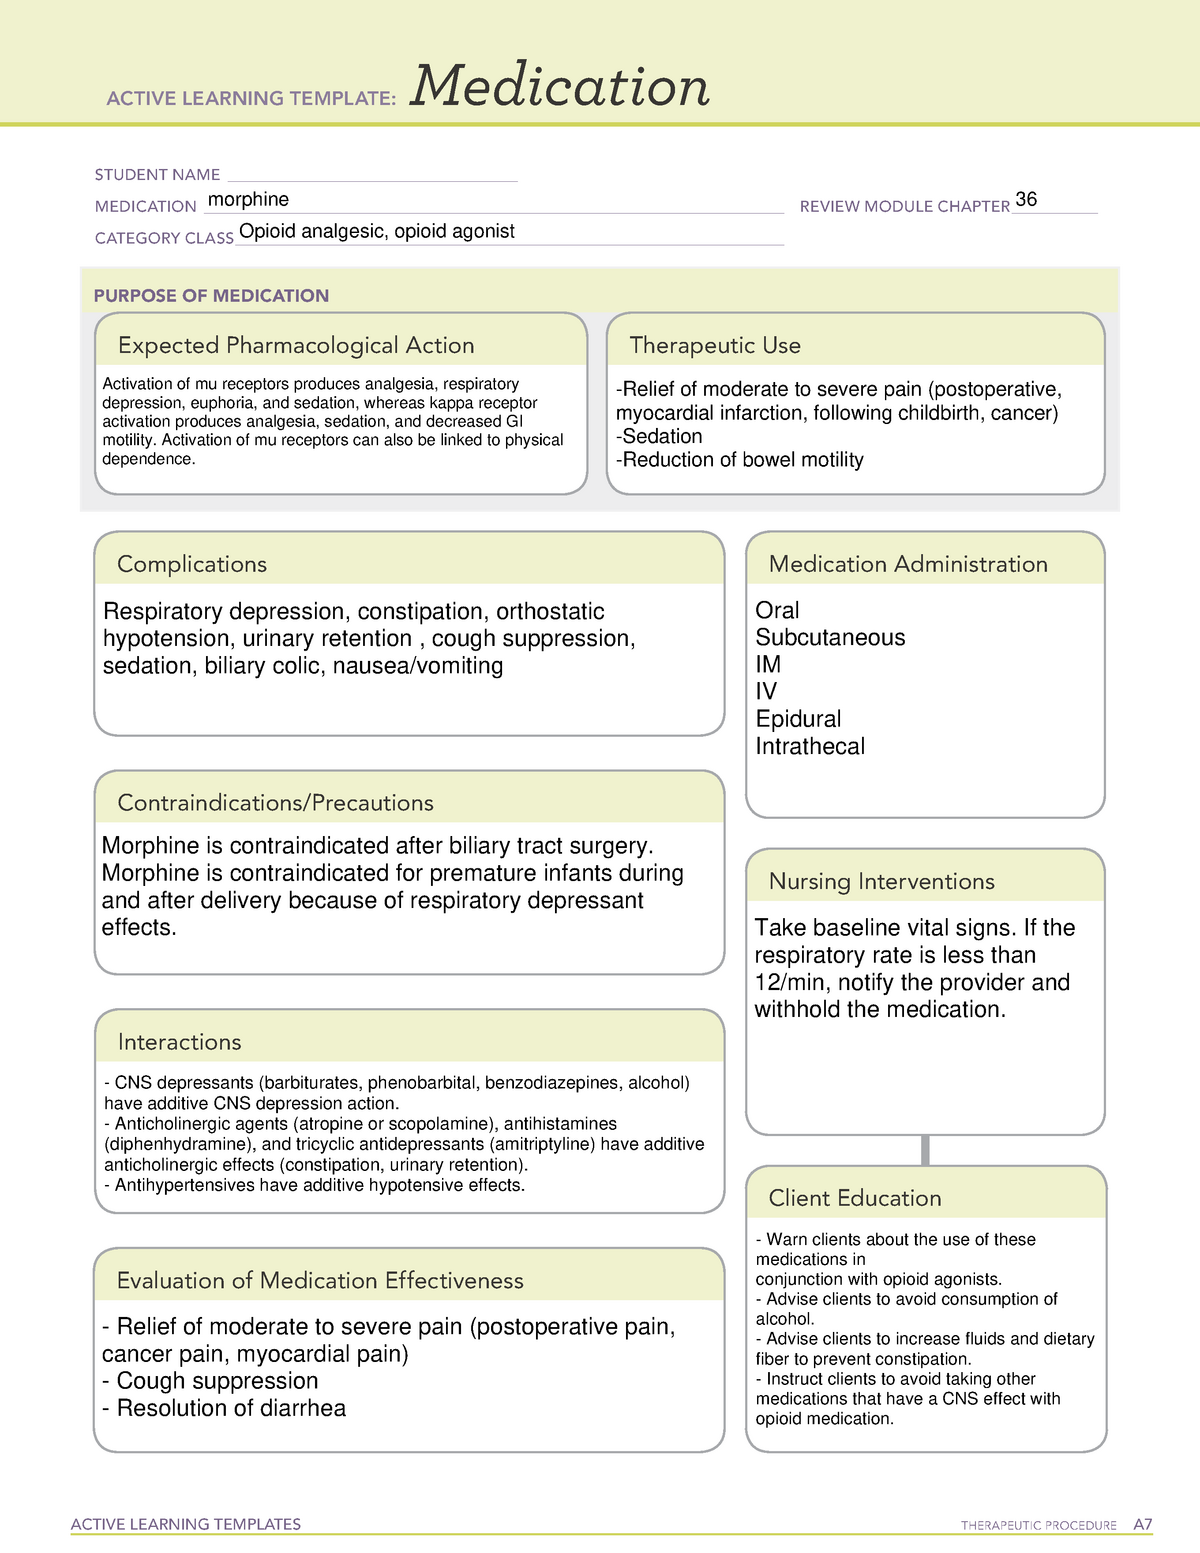 acetaminophen-ati-medication-template